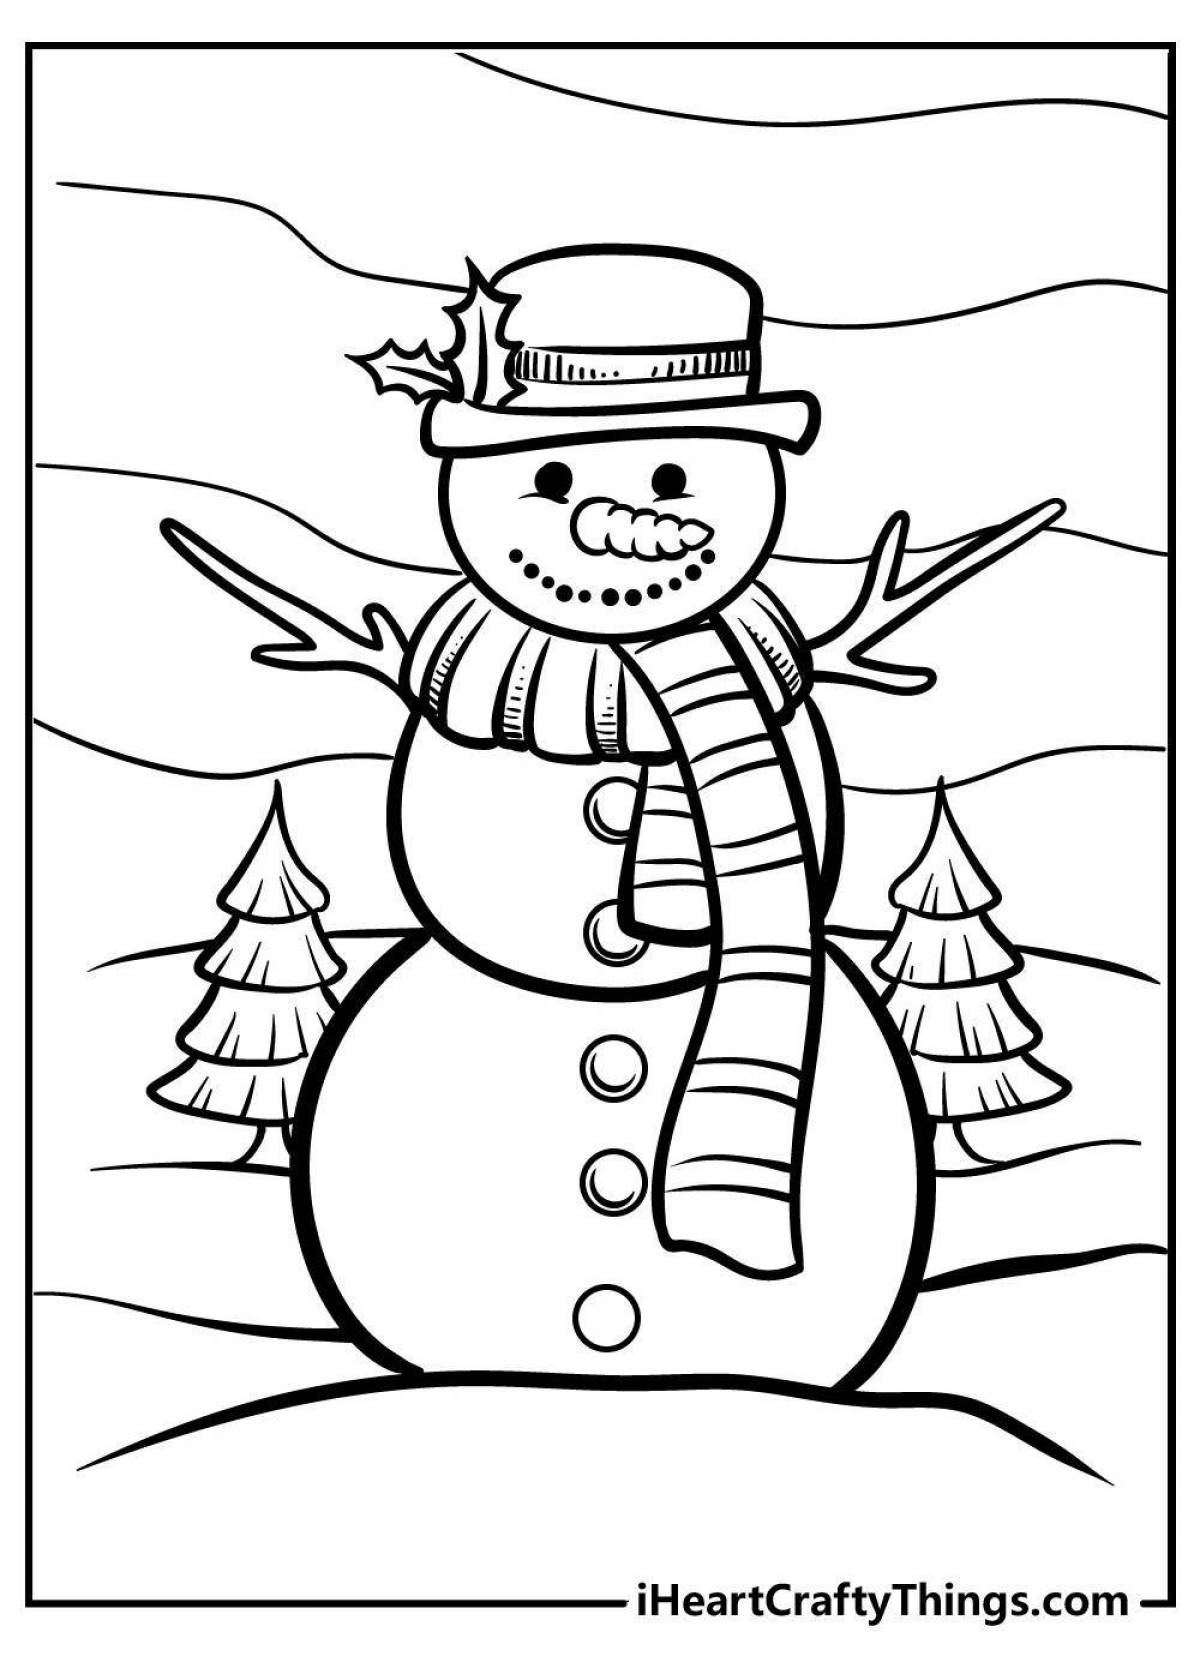 Color-frenzy coloring page снеговик для детей 3 4